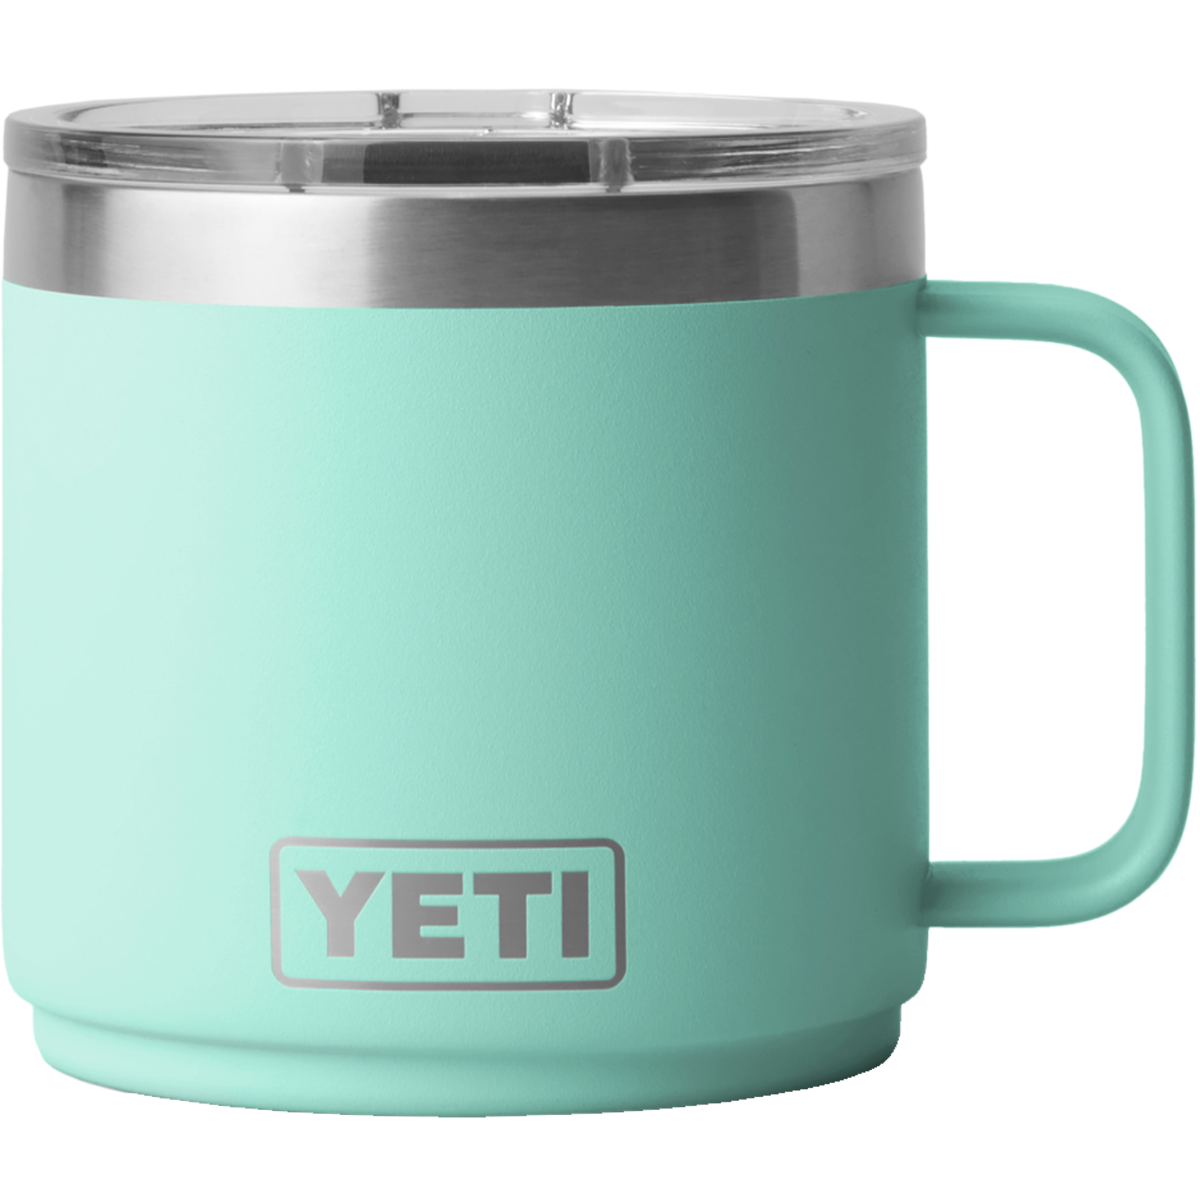 Yeti Rambler 14 oz Mug with MagSlider Lid, Camp Kitchen